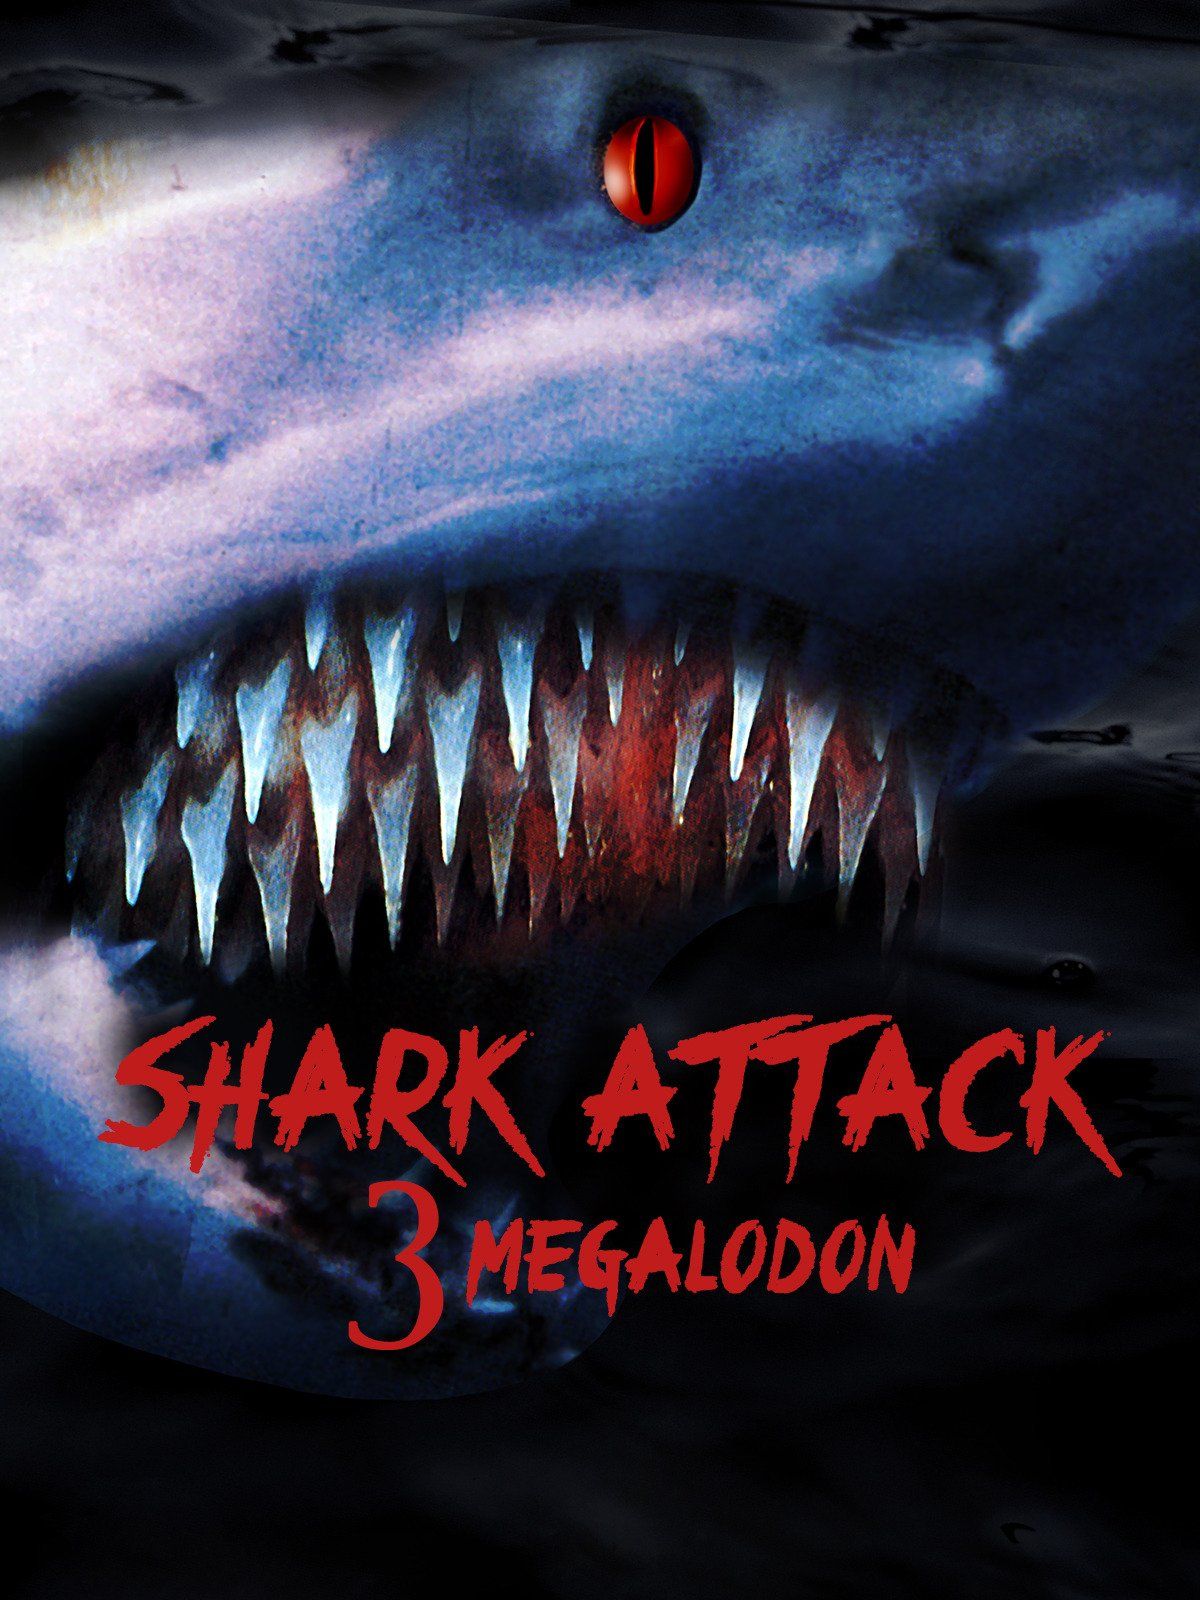 Watch Shark Attack 3: Megalodon. Prime .amazon.com